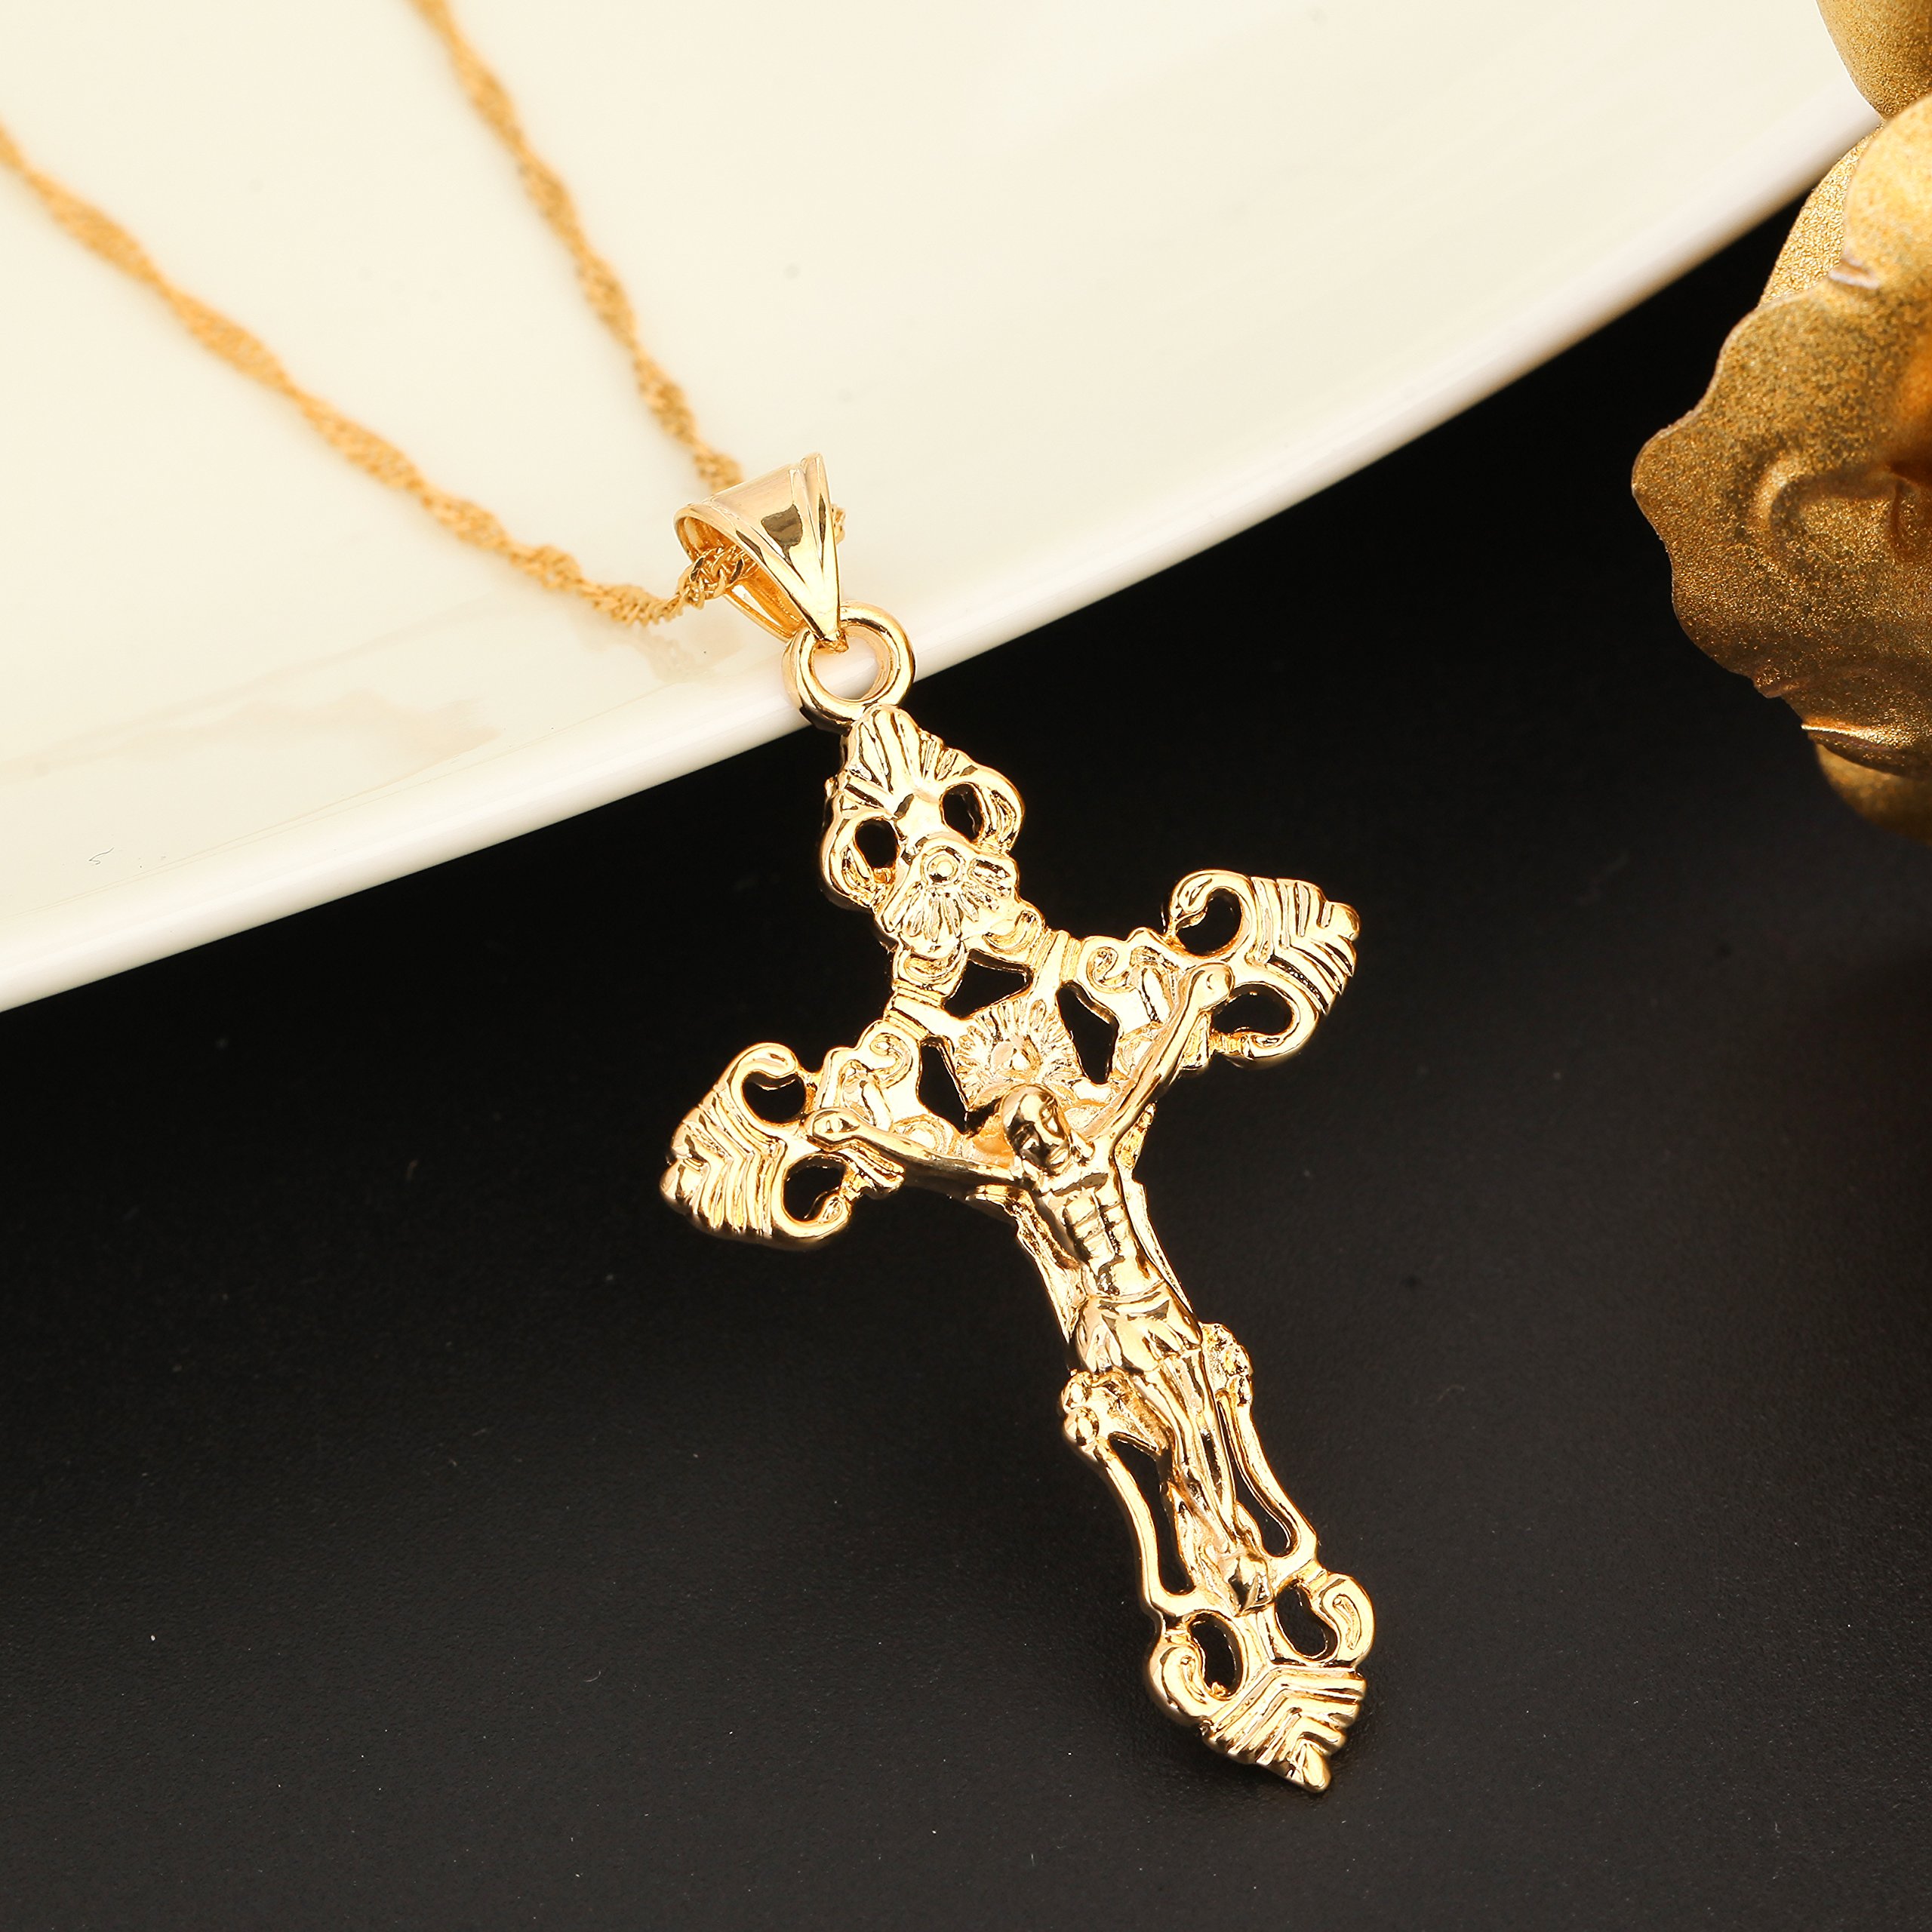 24K Gold Plated Catholic Cross Jesus Christ Cross Pendant Necklace Jewelry for Women